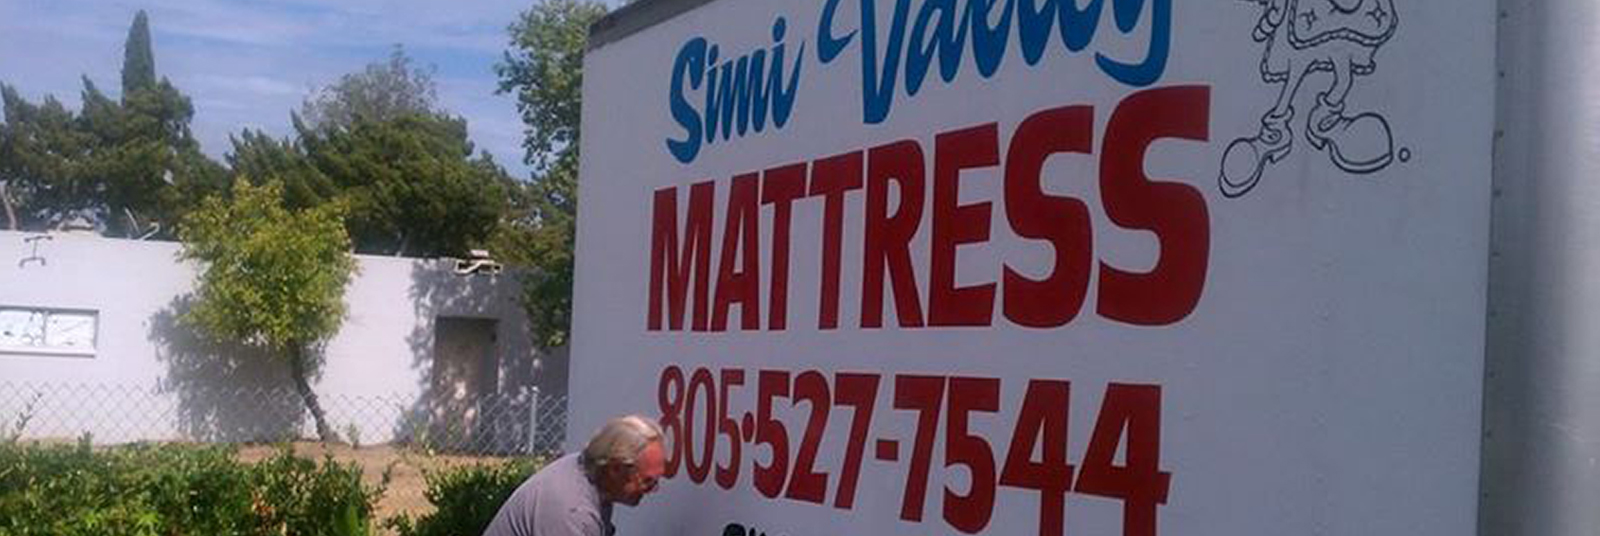 Simi Valley Mattress Store